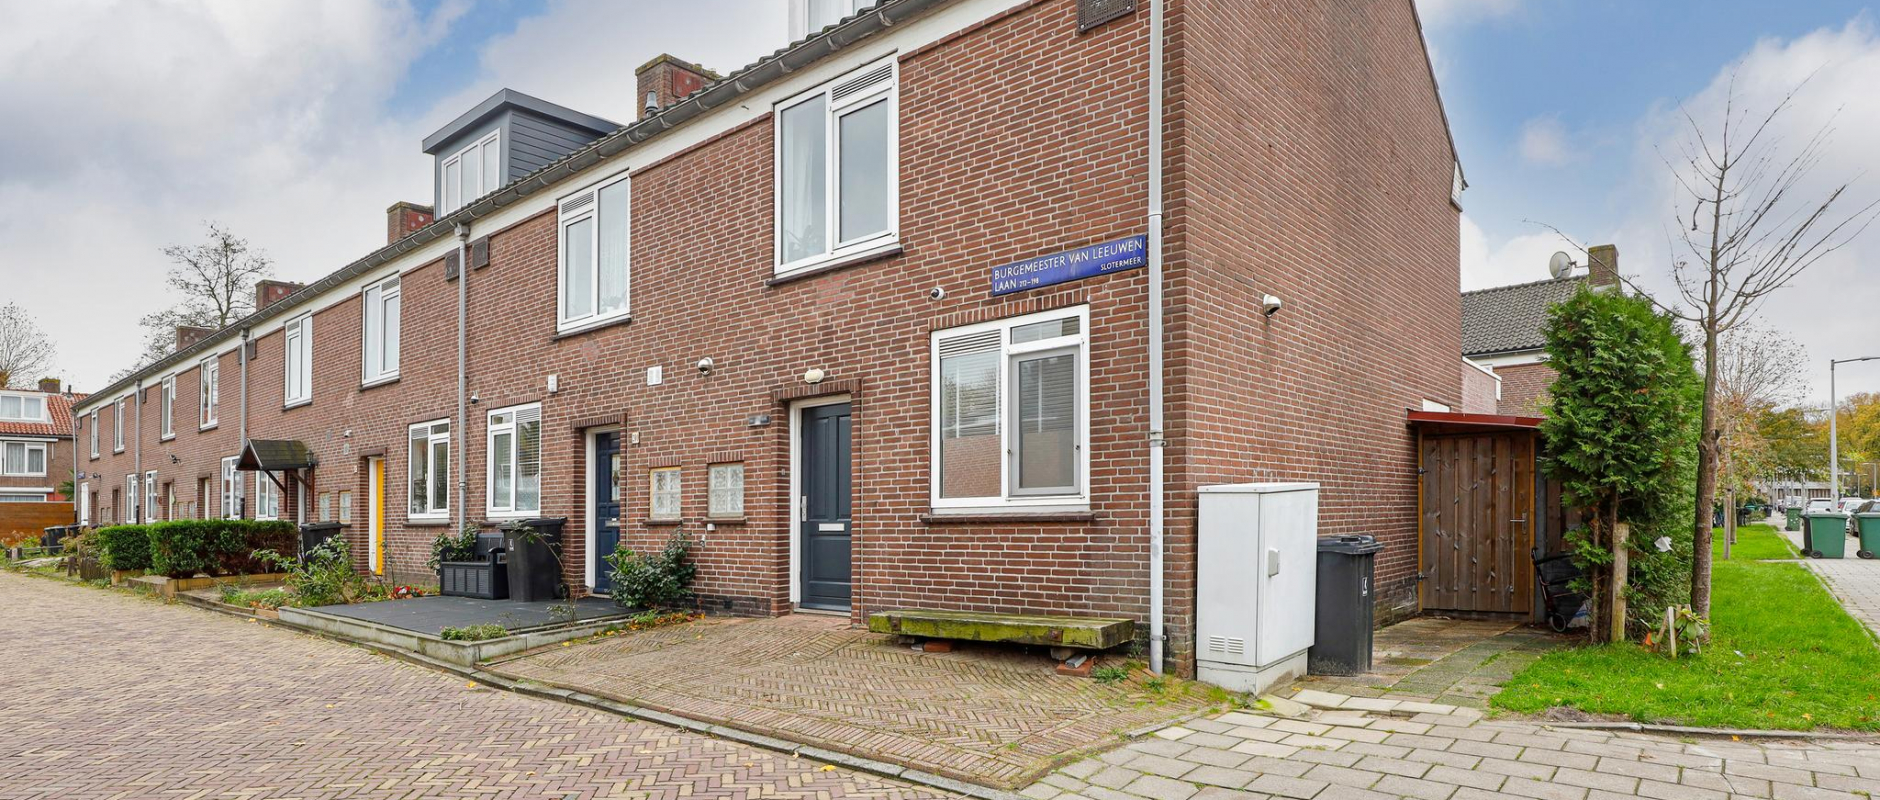 Woning te koop aan de Burgemeester Van Leeuwenlaan 198 te Amsterdam